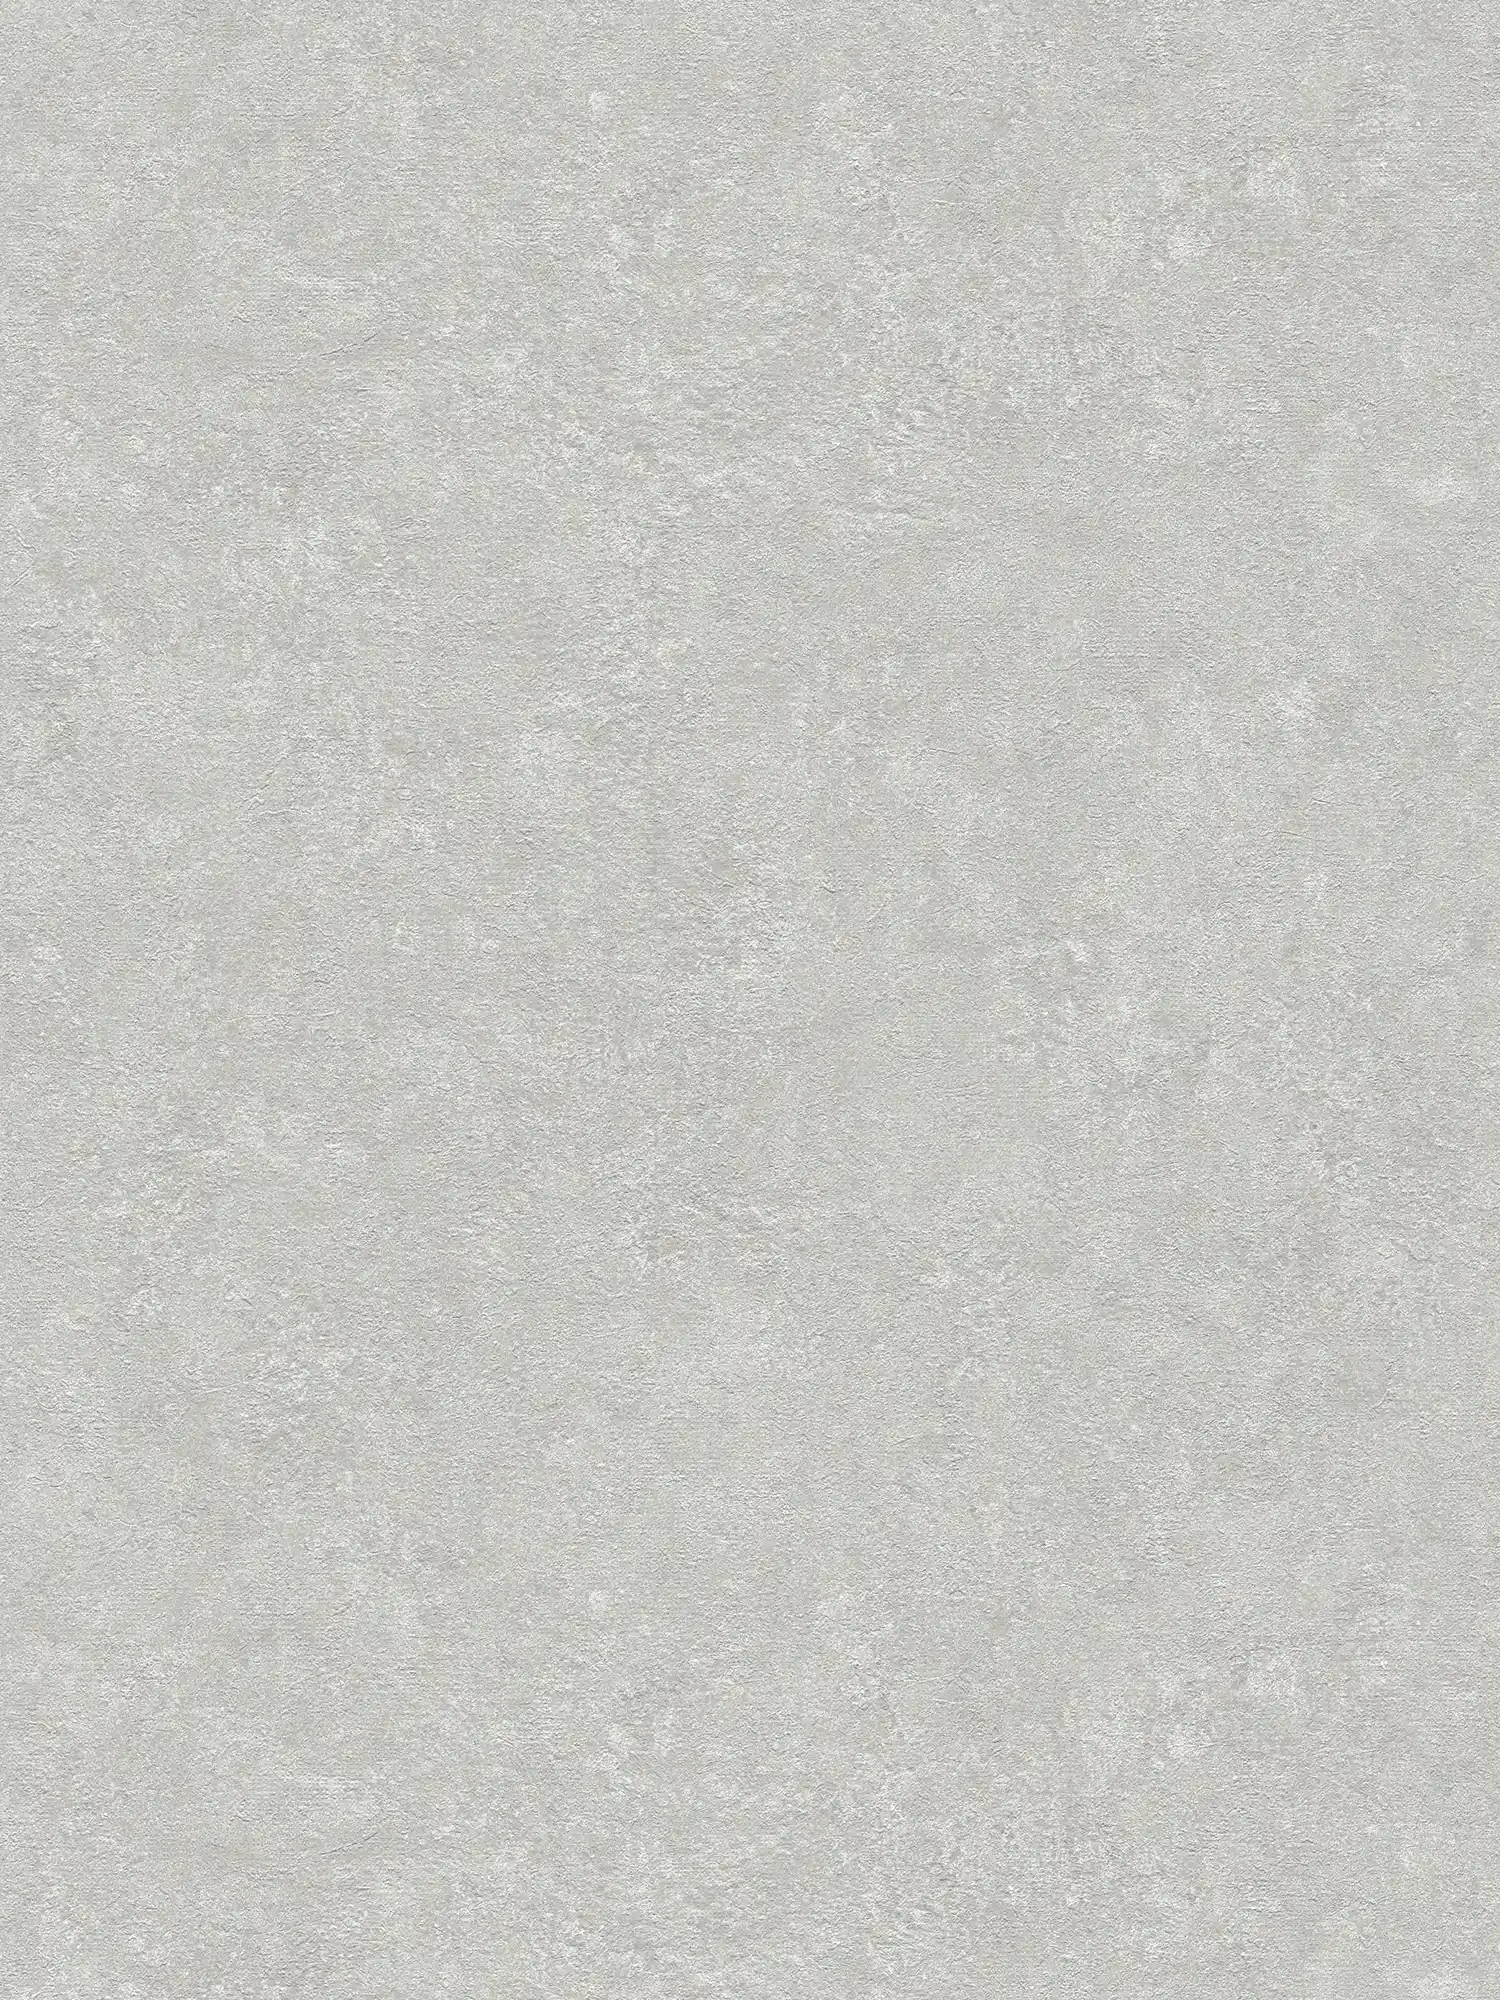         Metalloptik Tapete mit Rost-Akzenten im Industrial Style – Grau
    